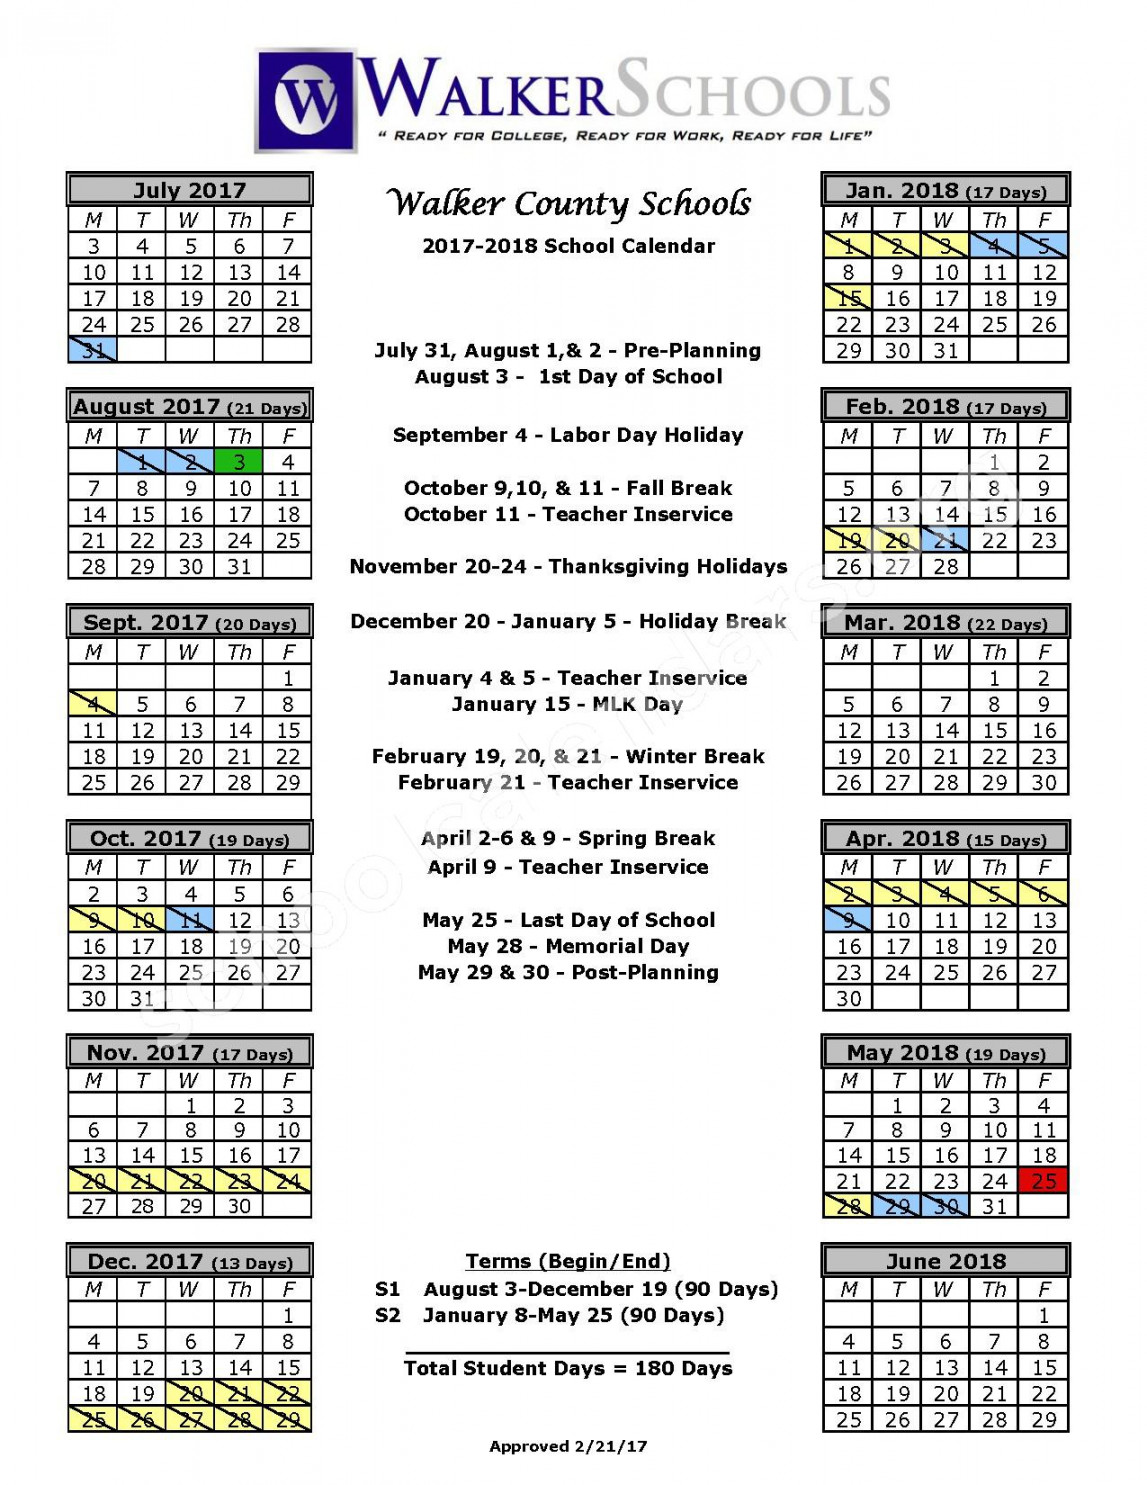 Walker County School District Calendars – LaFayette, GA